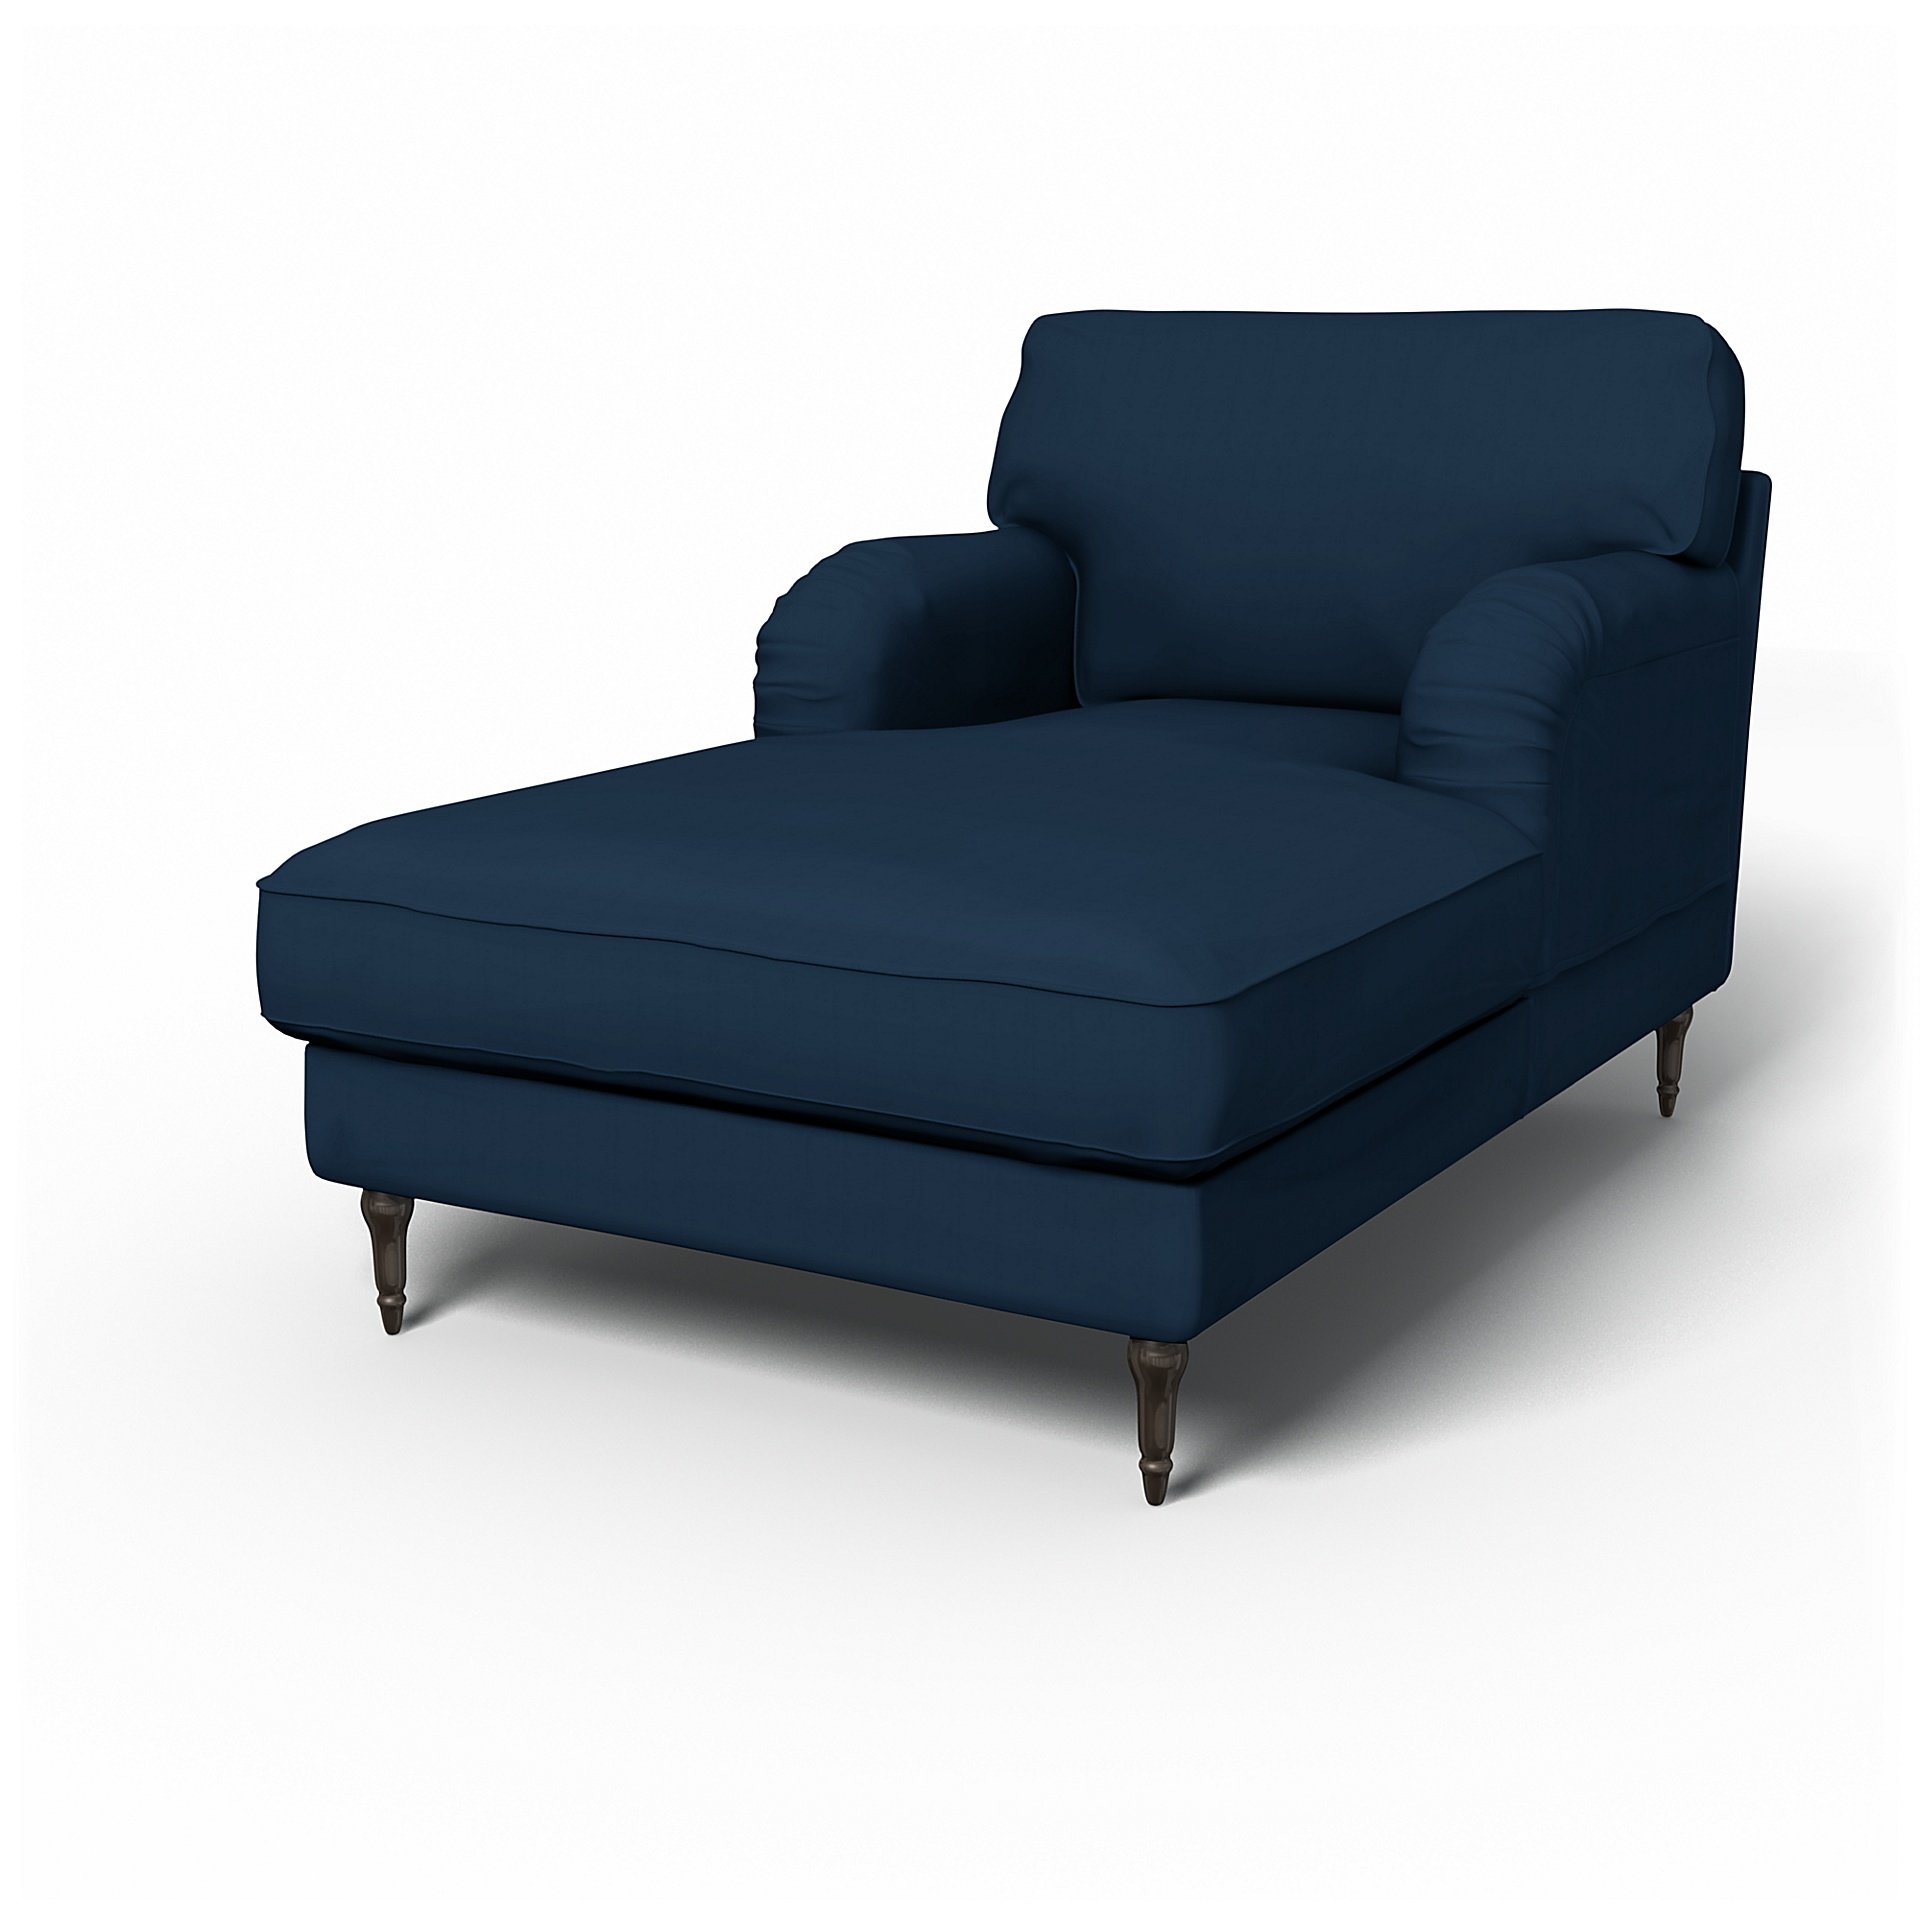 IKEA - Stocksund Chaise Longue Cover, Deep Navy Blue, Cotton - Bemz